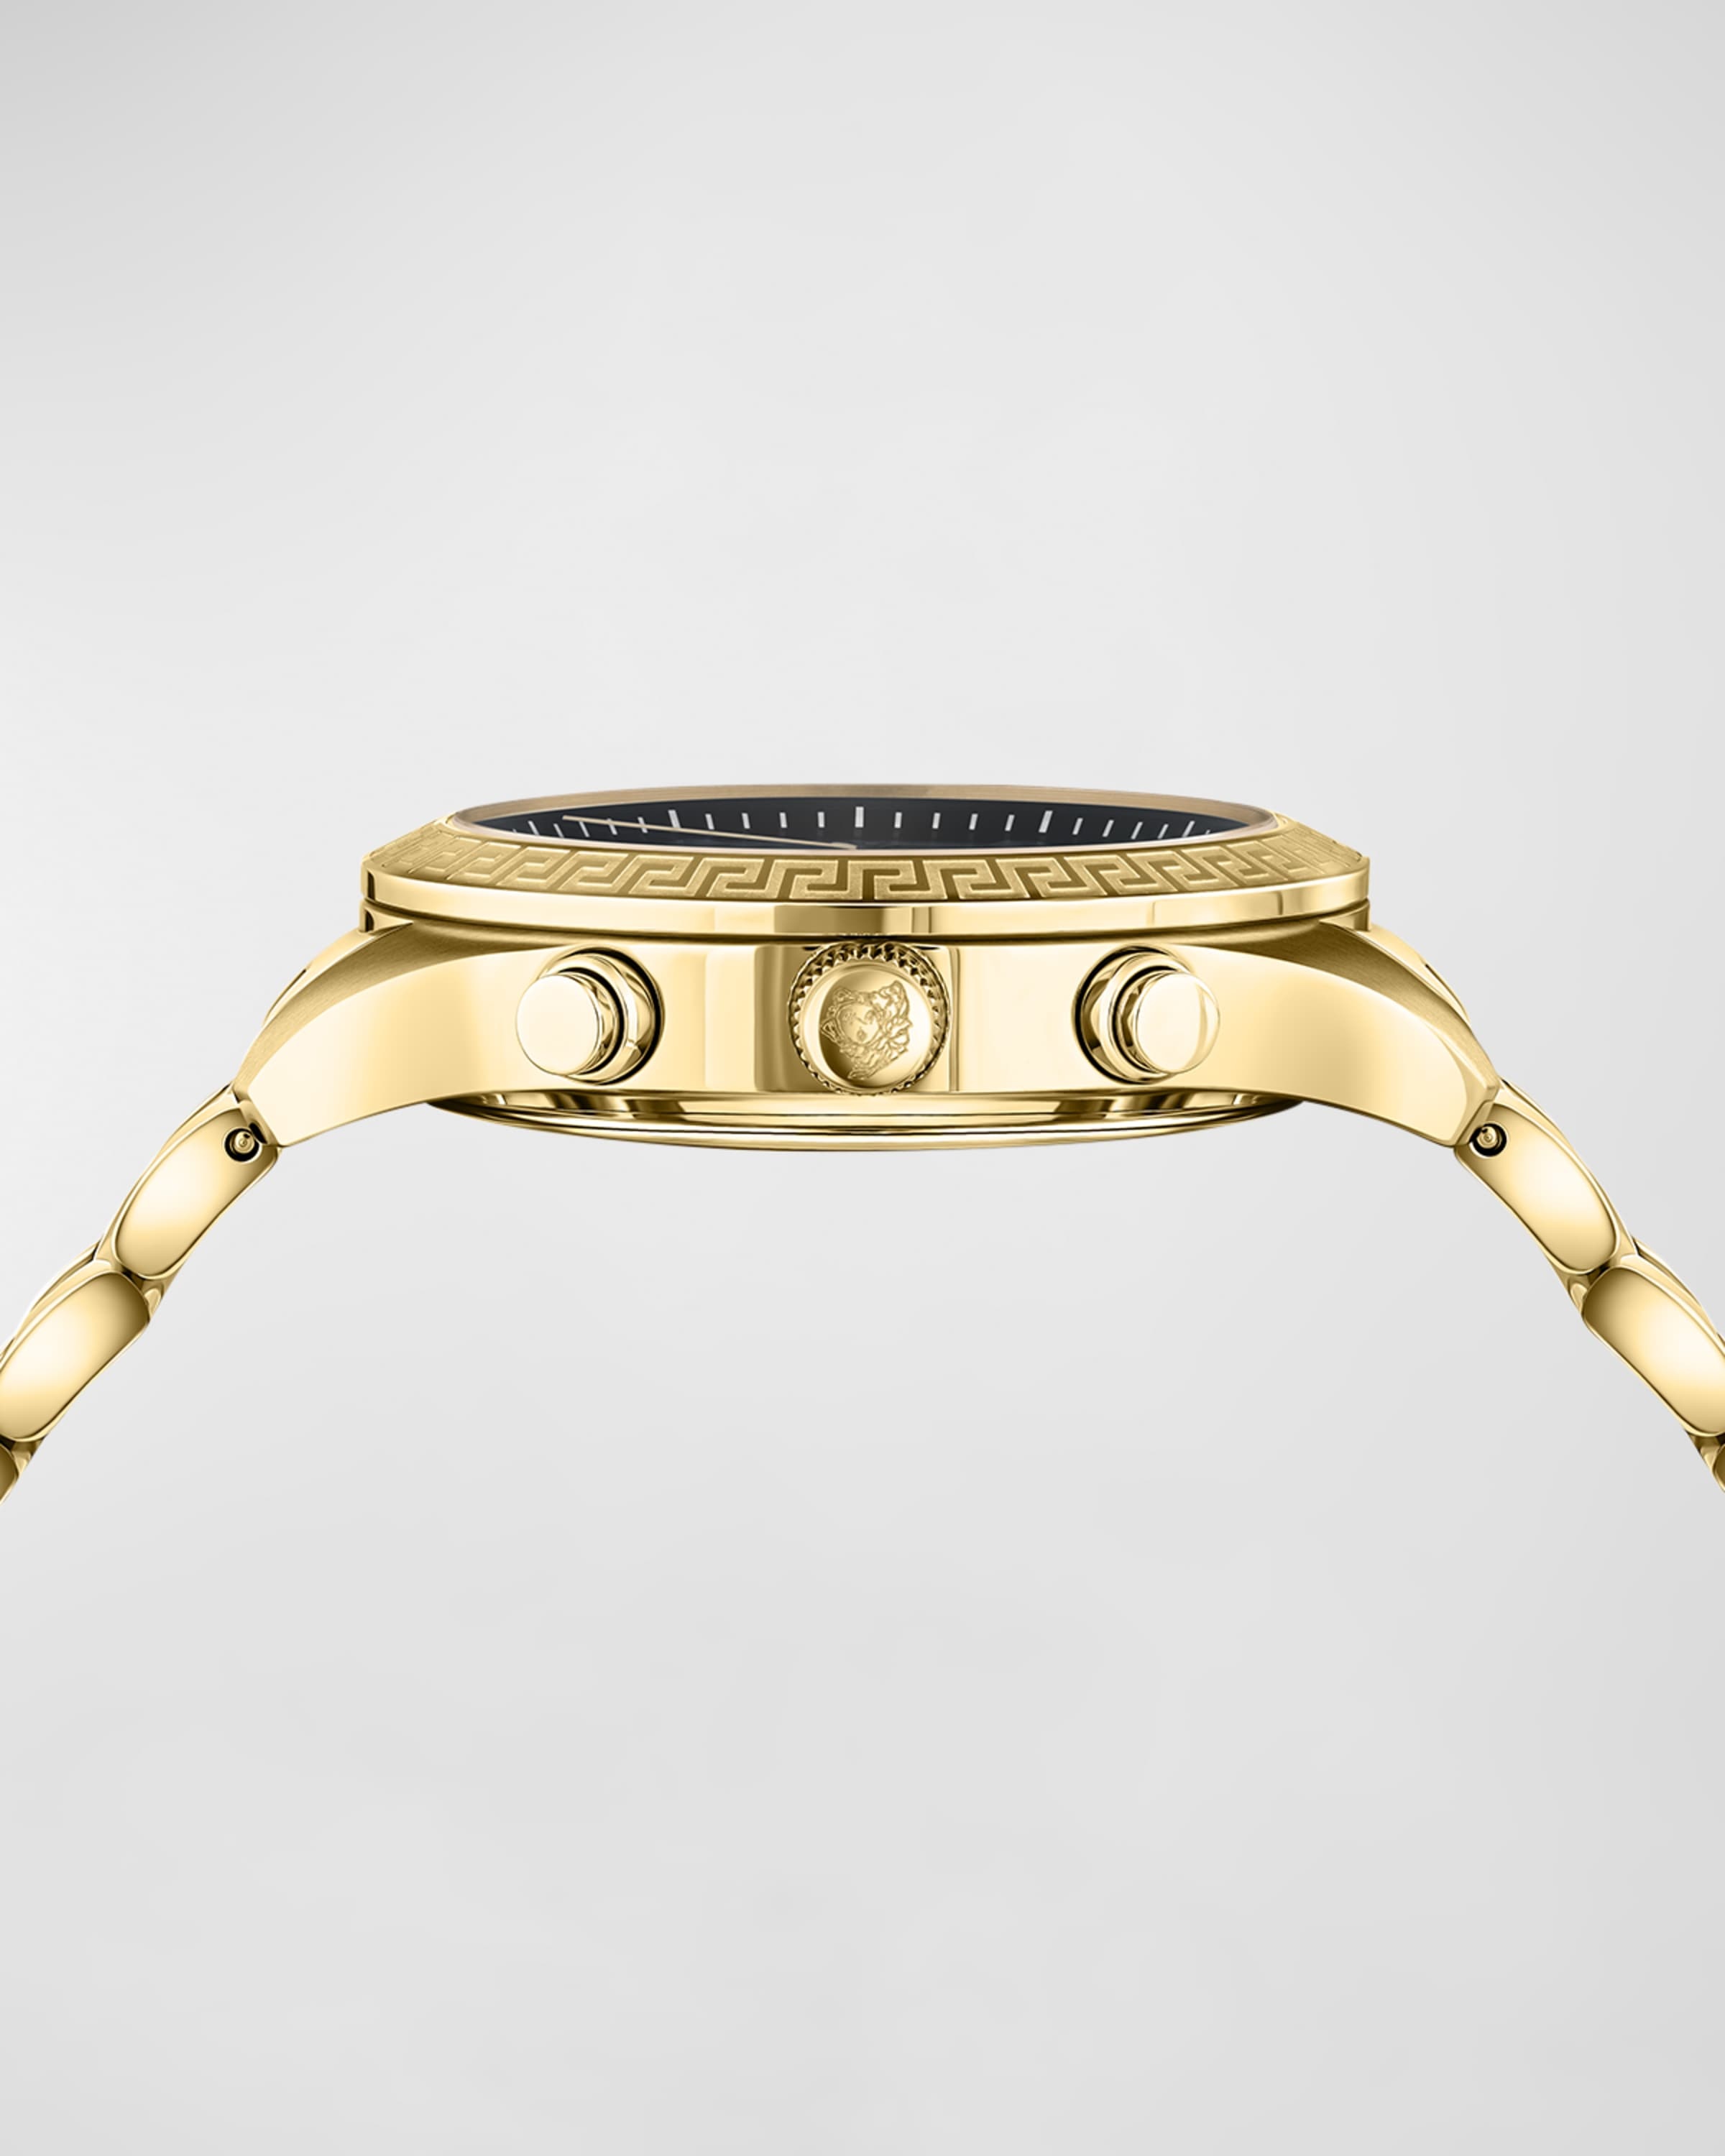 40mm Greca Chrono Watch with Bracelet Strap, Yellow Gold/Black - 3